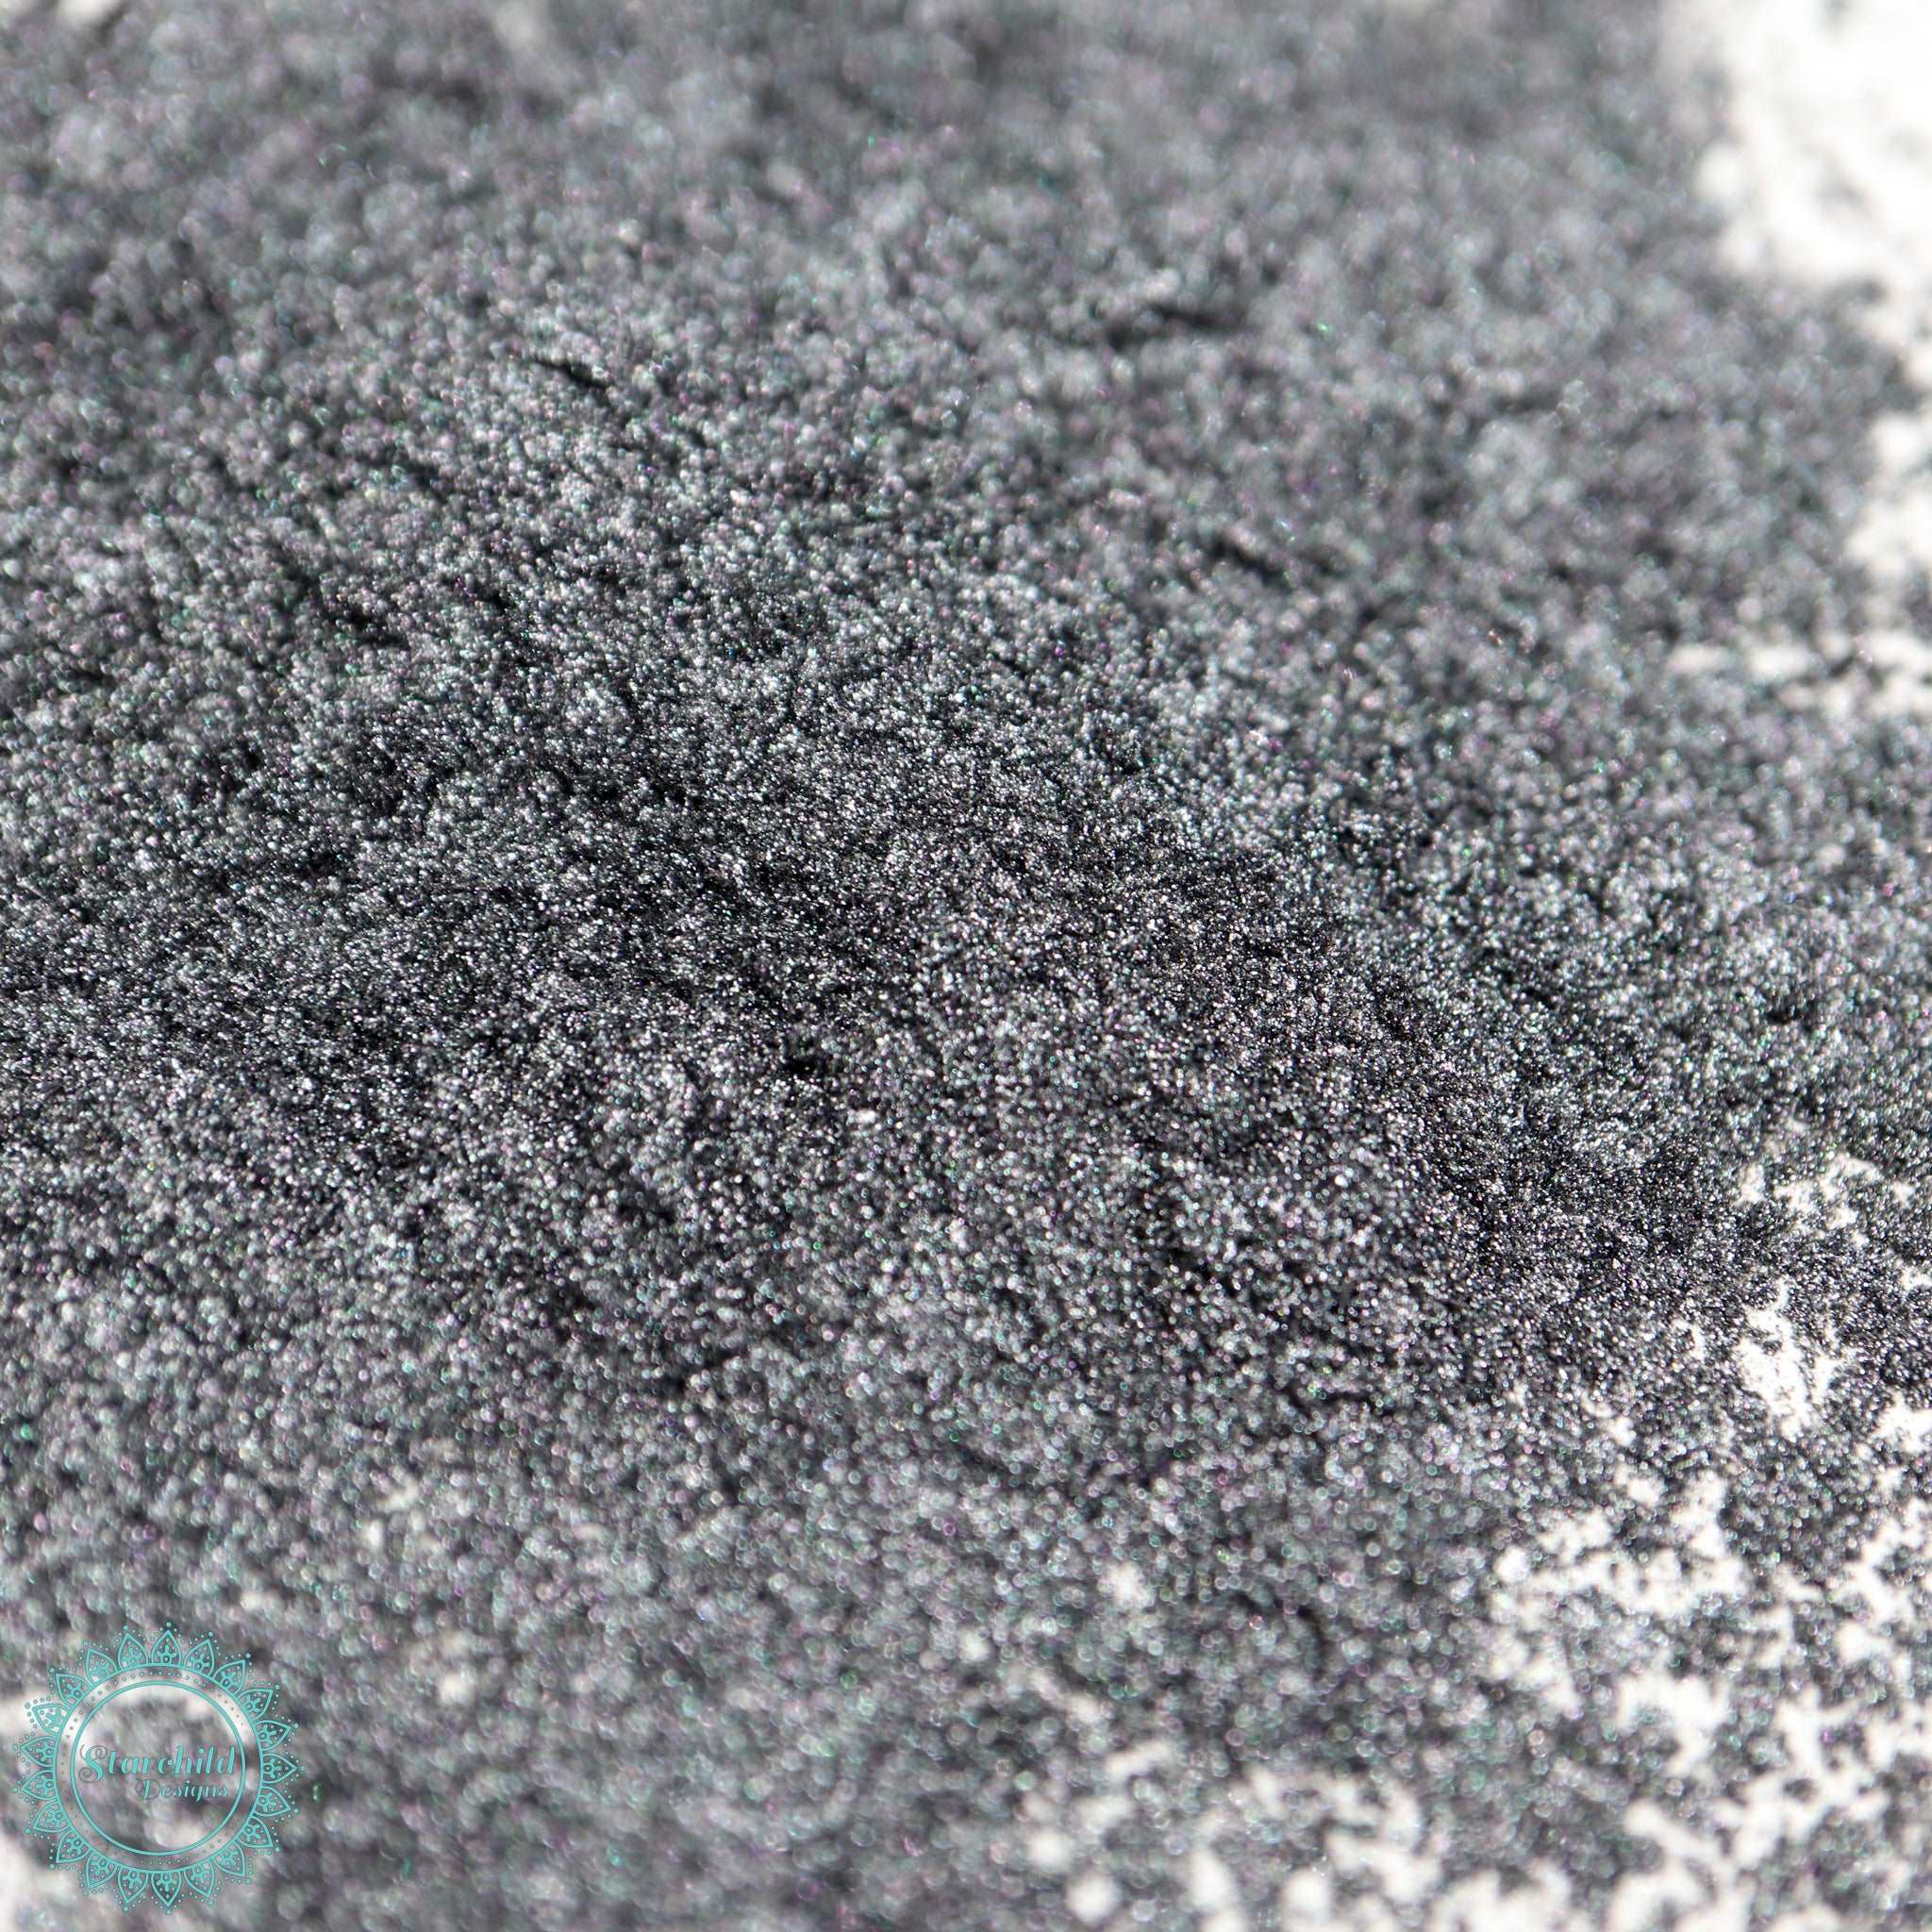 Charcoal Grey - Mica Pigment Powder, Epoxy Resin Art, Brisbane, Australia